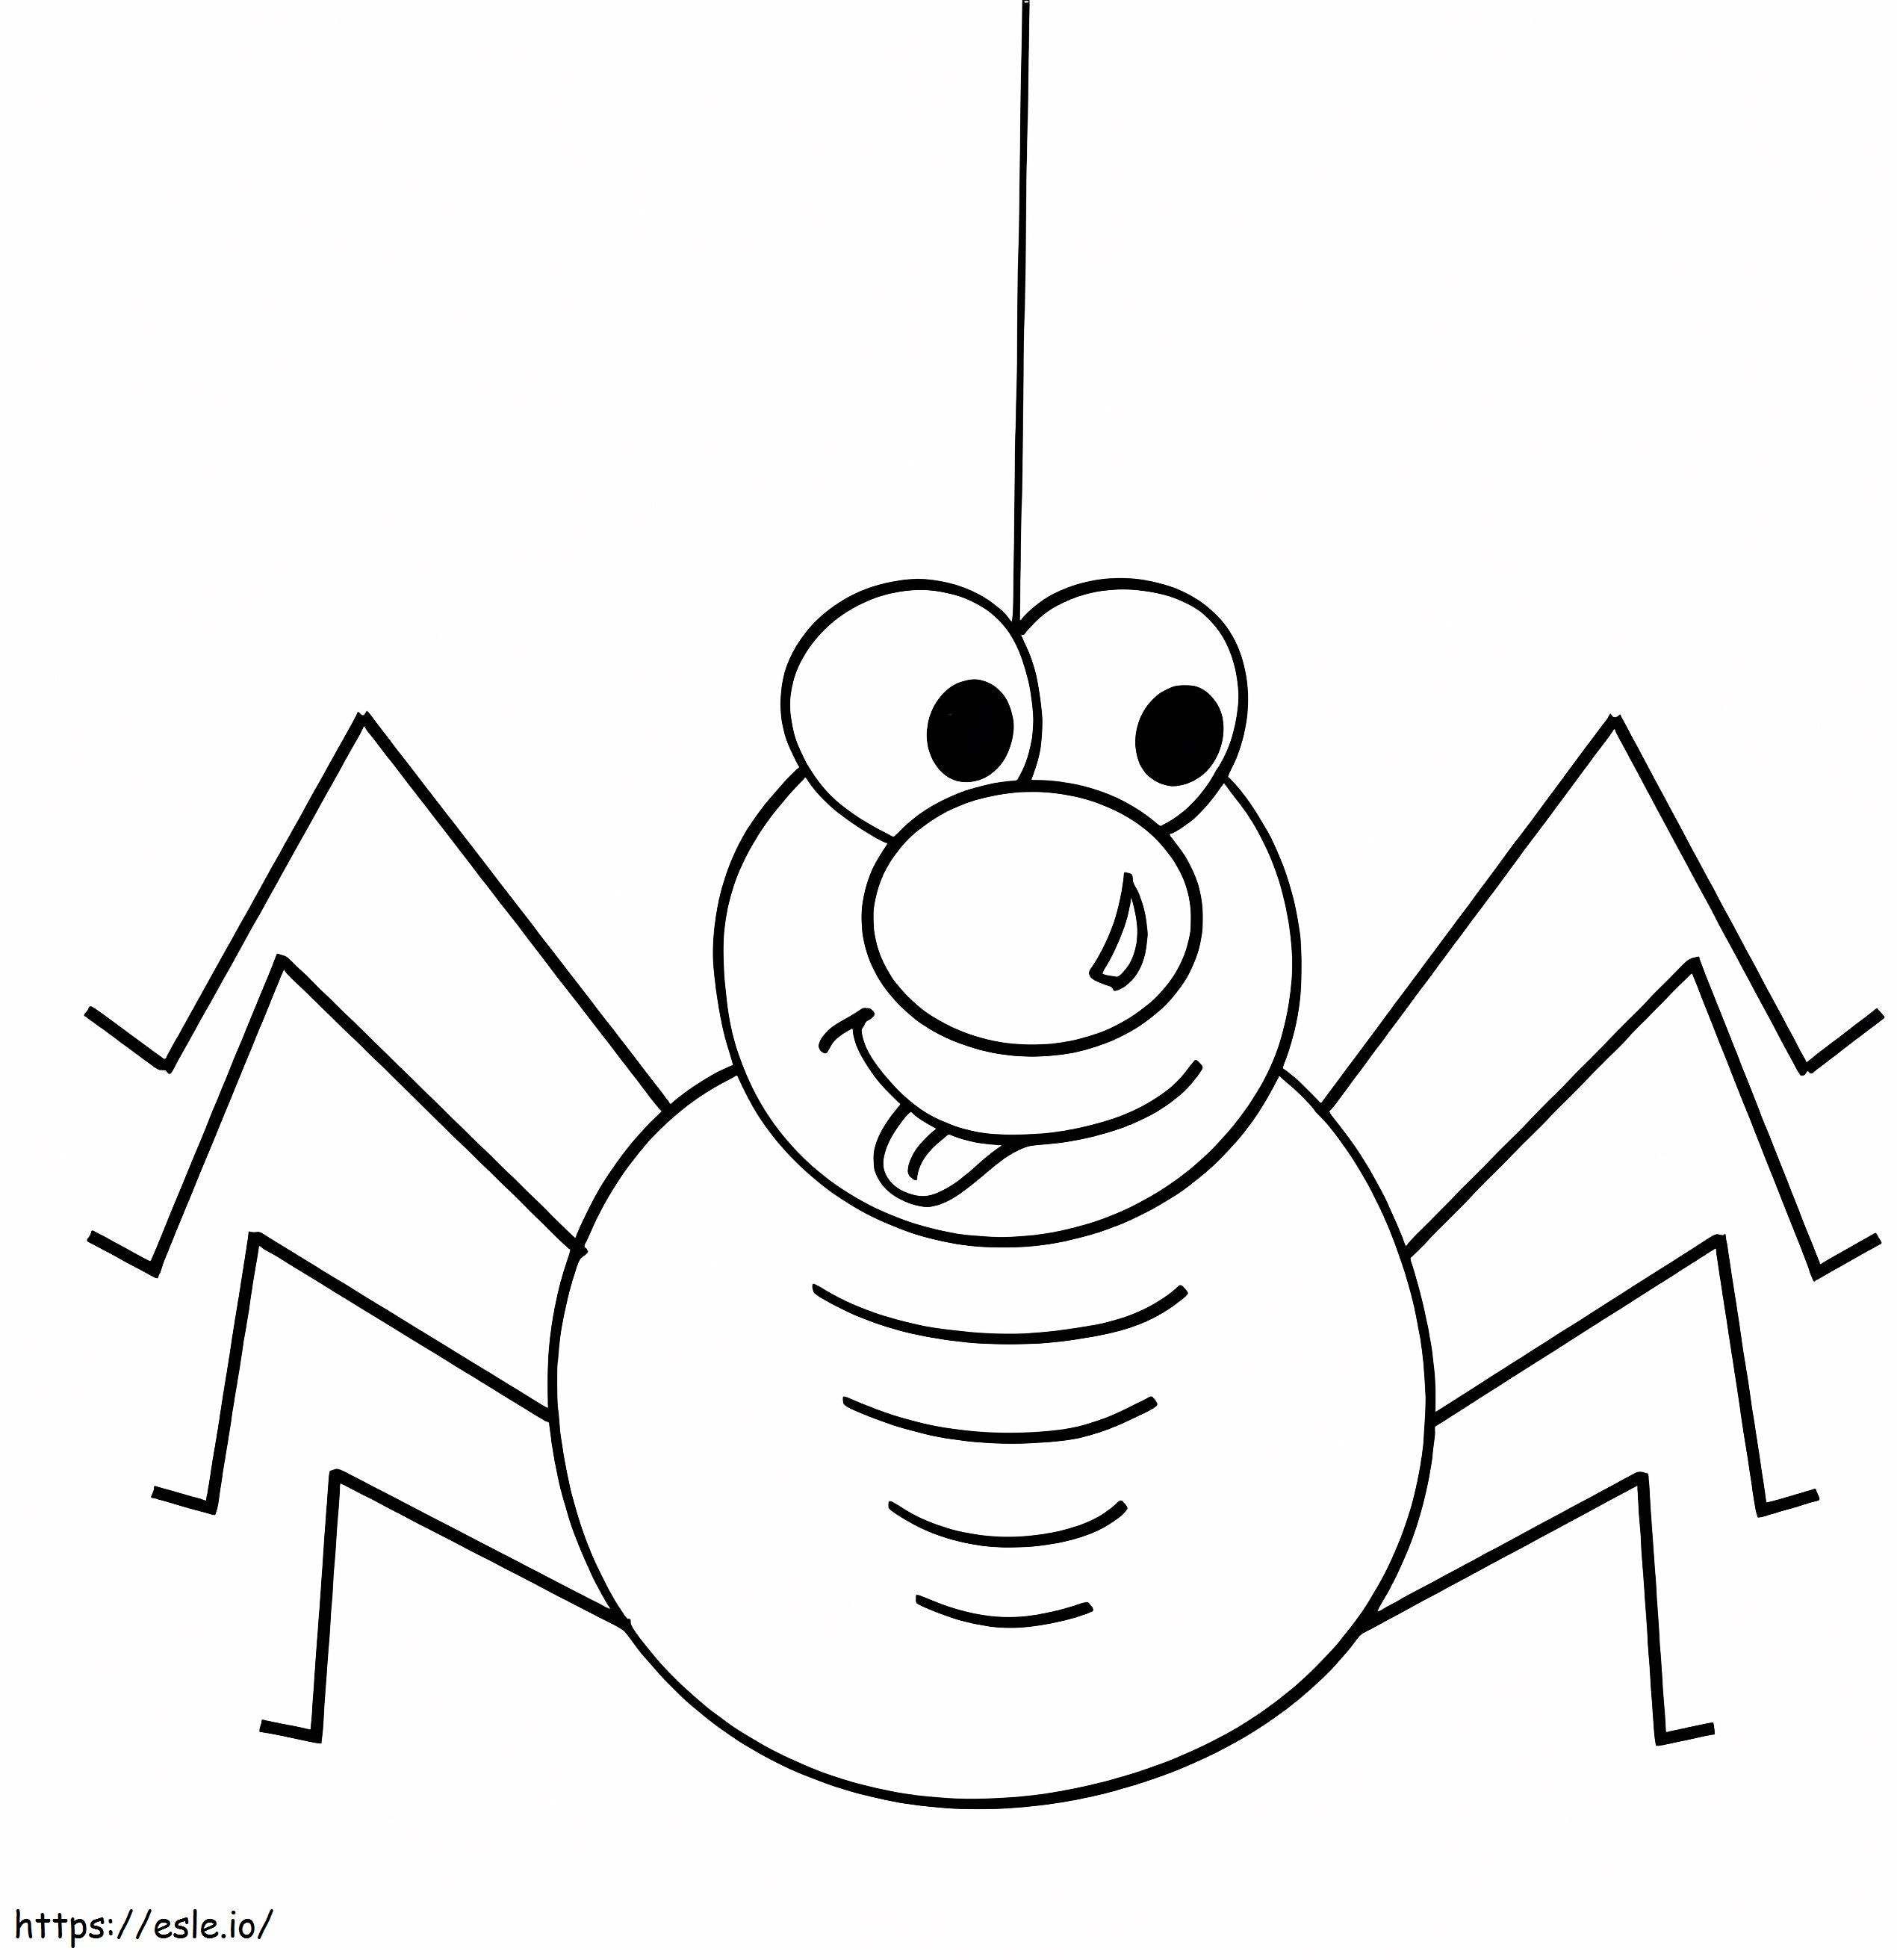 Druckbare lustige Spinne ausmalbilder